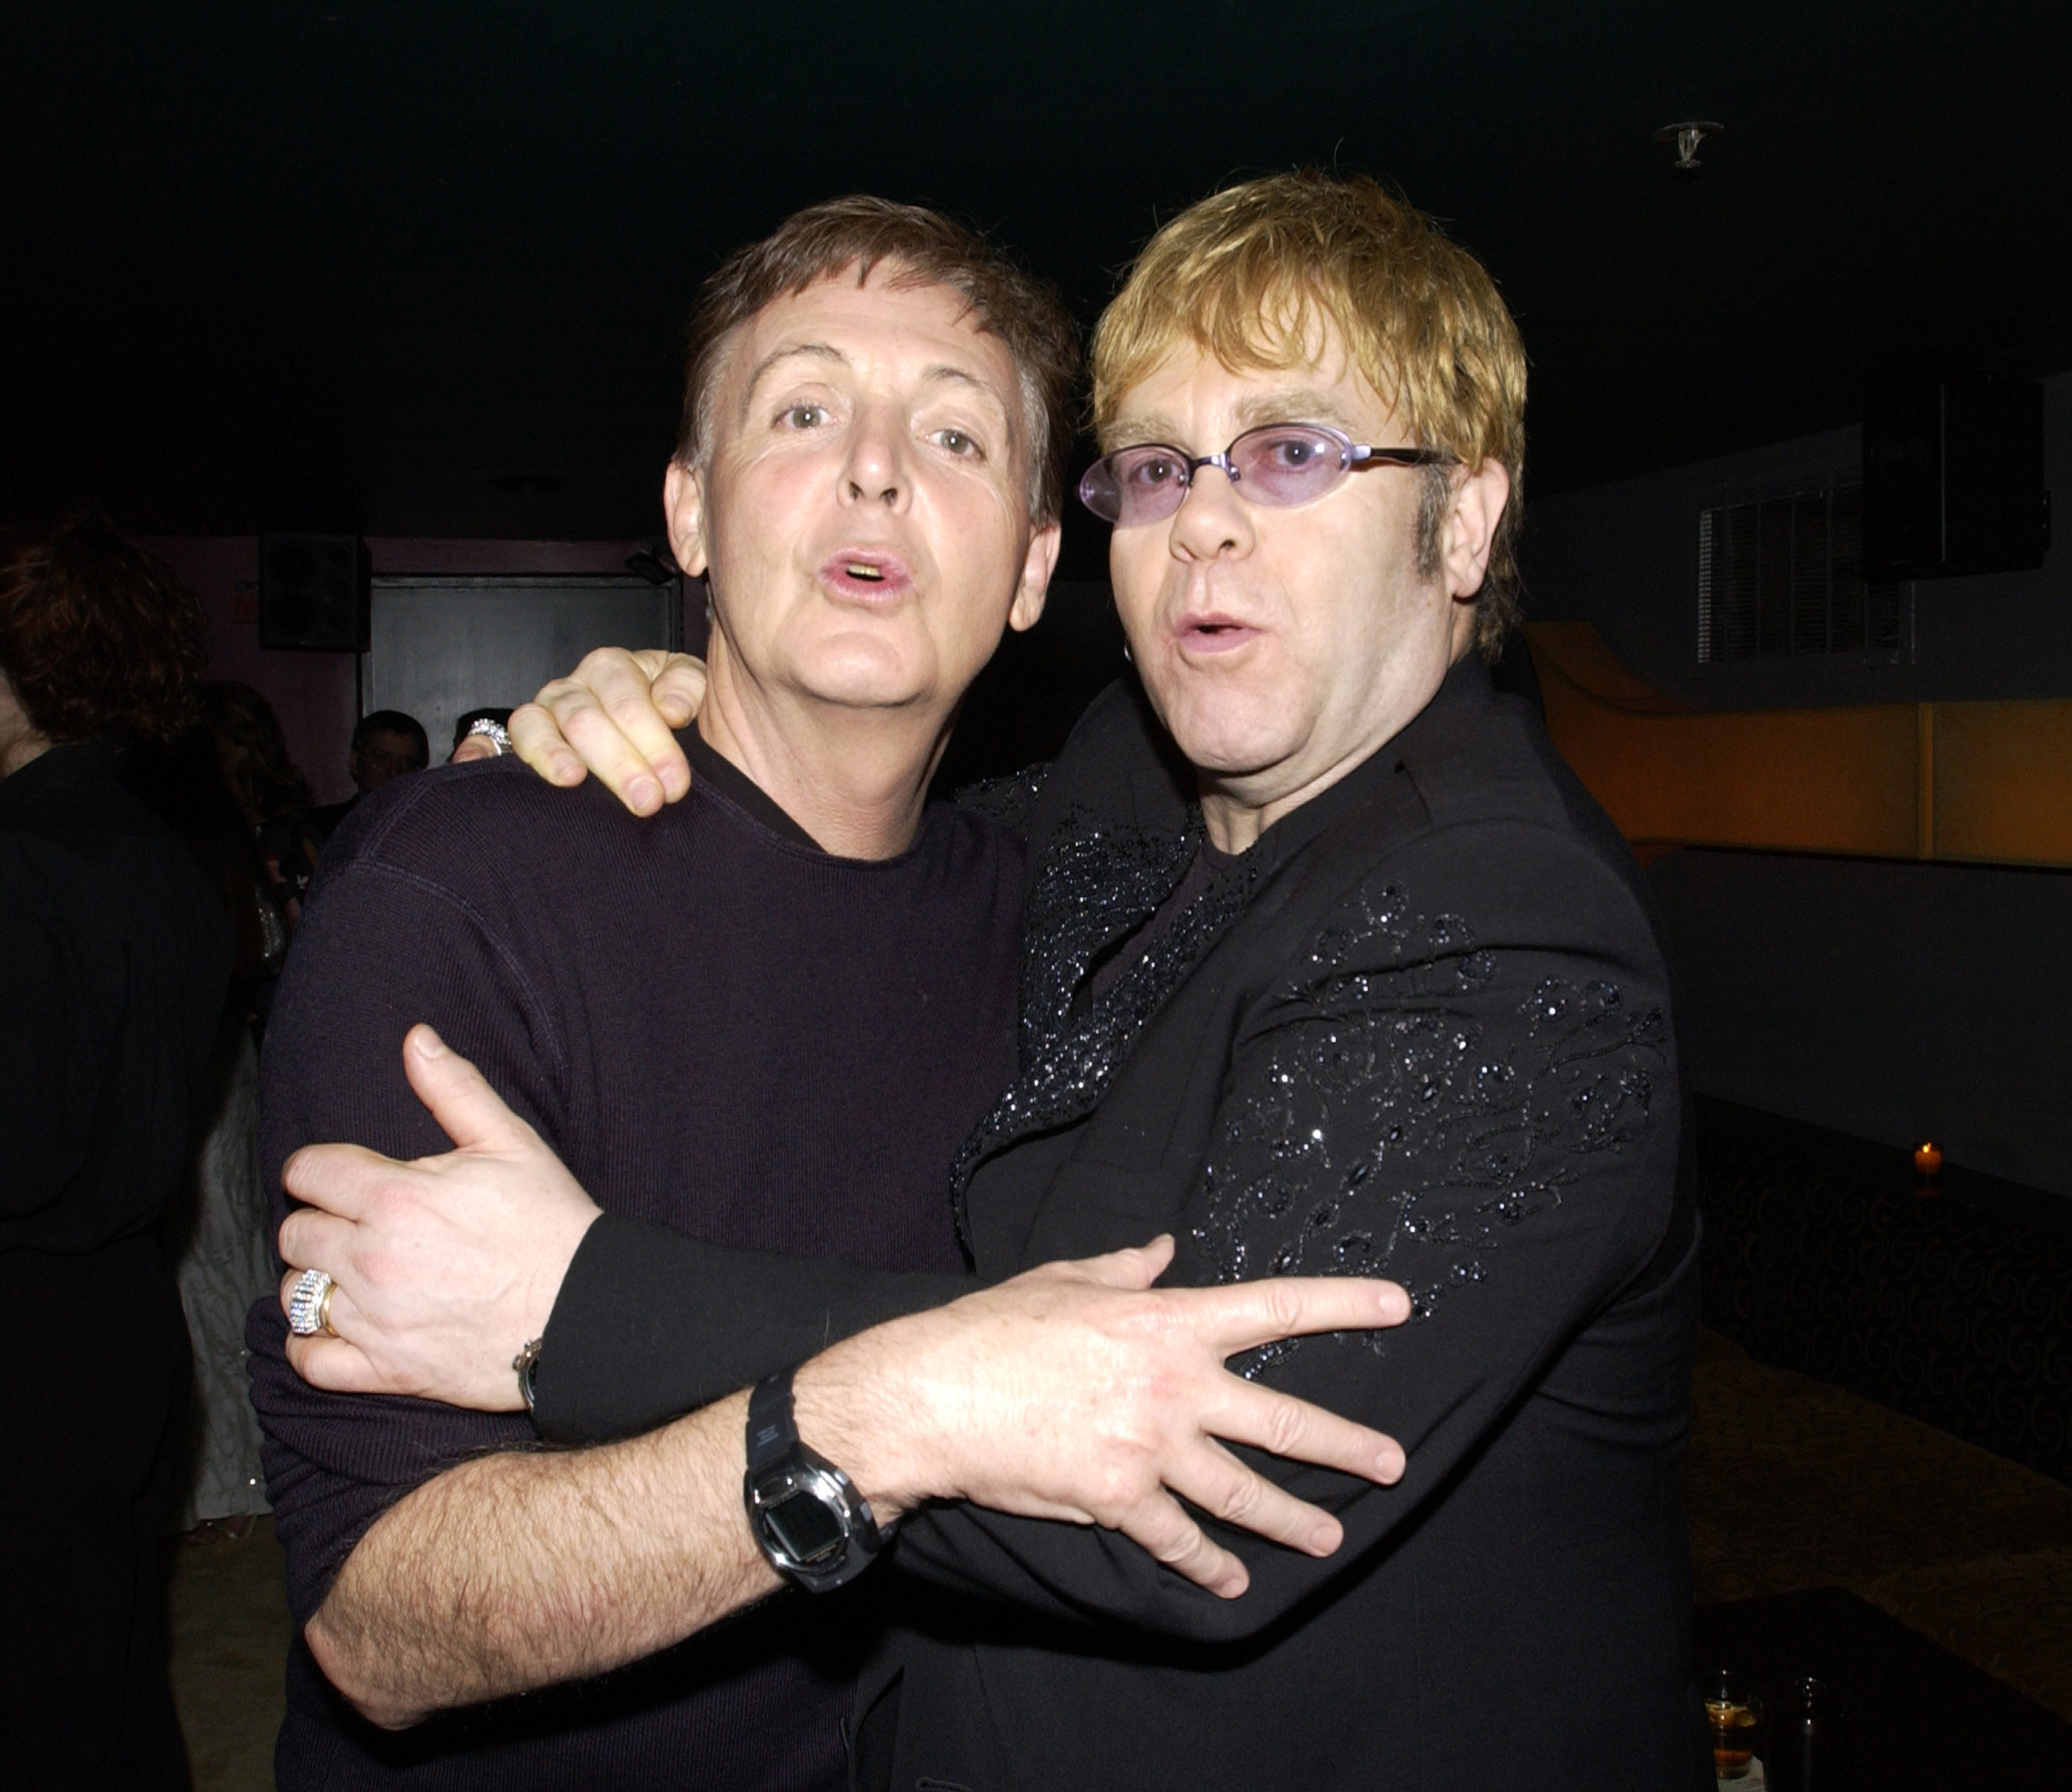 Clip of Paul McCartney taking video of Elton John at Glastonbury goes viral